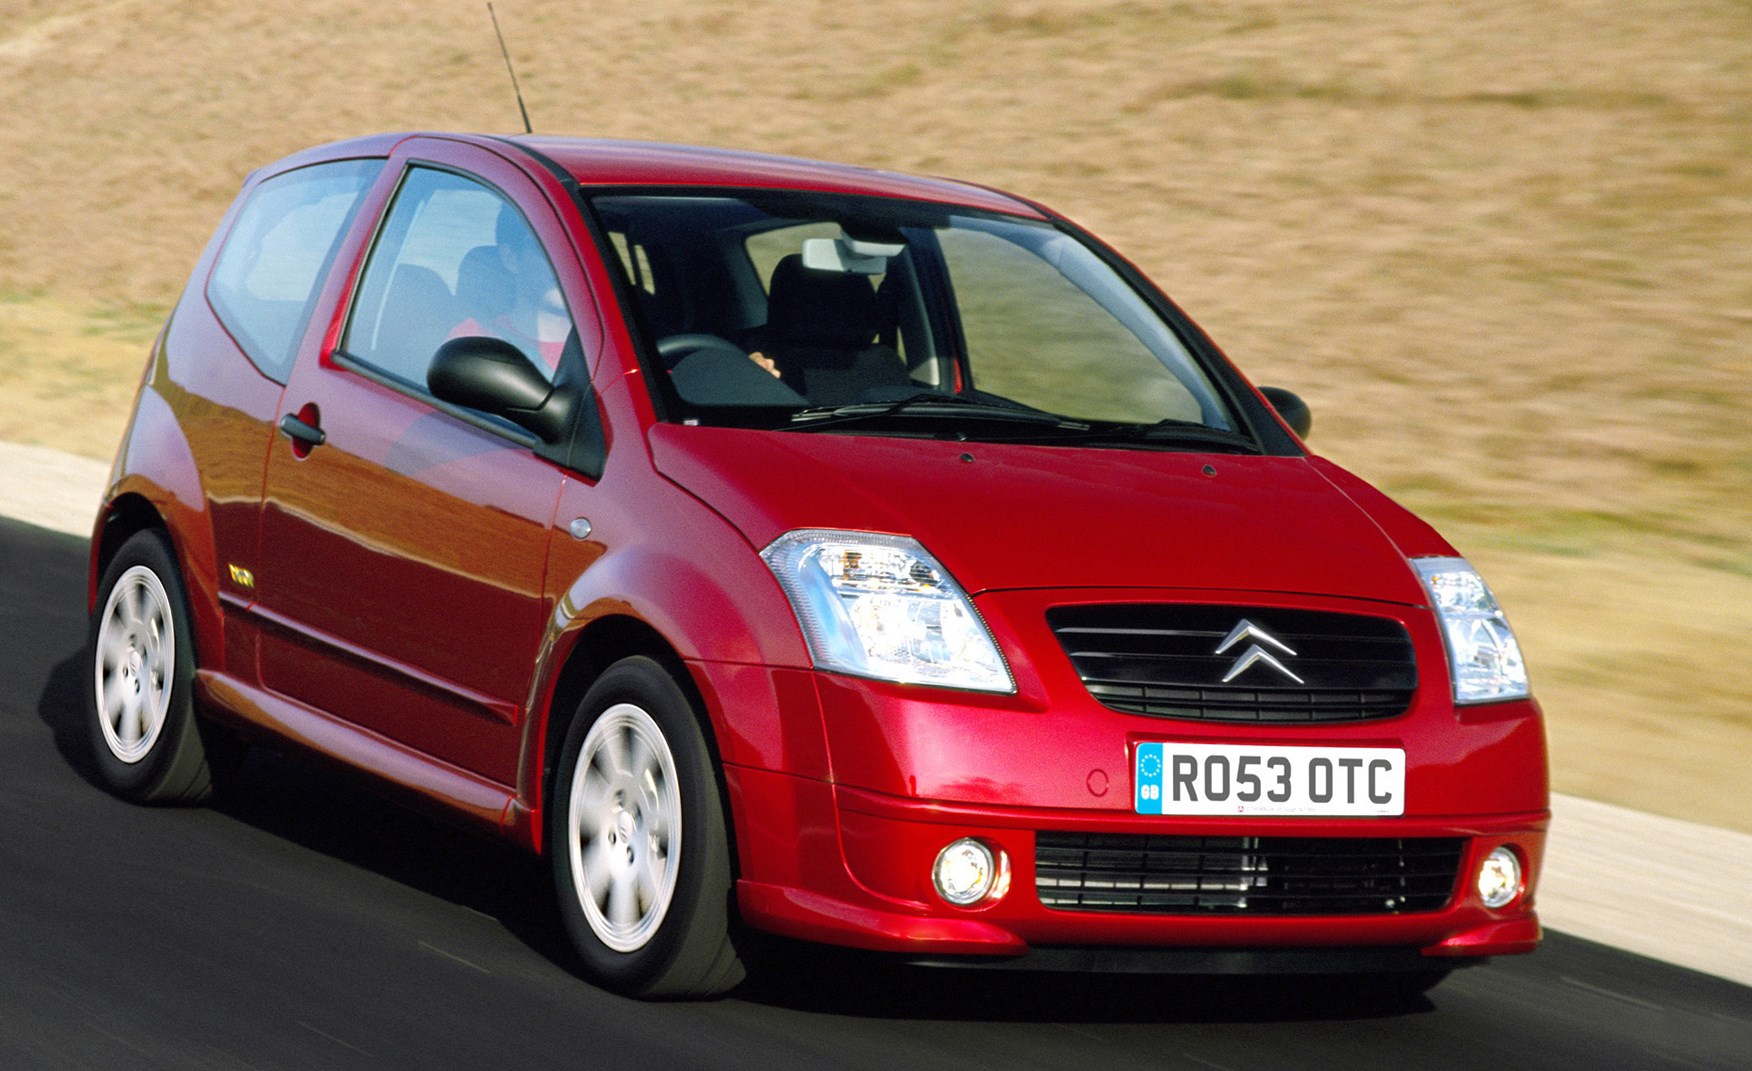 Used Citroën C2 Hatchback (2003 - 2009) Review | Parkers